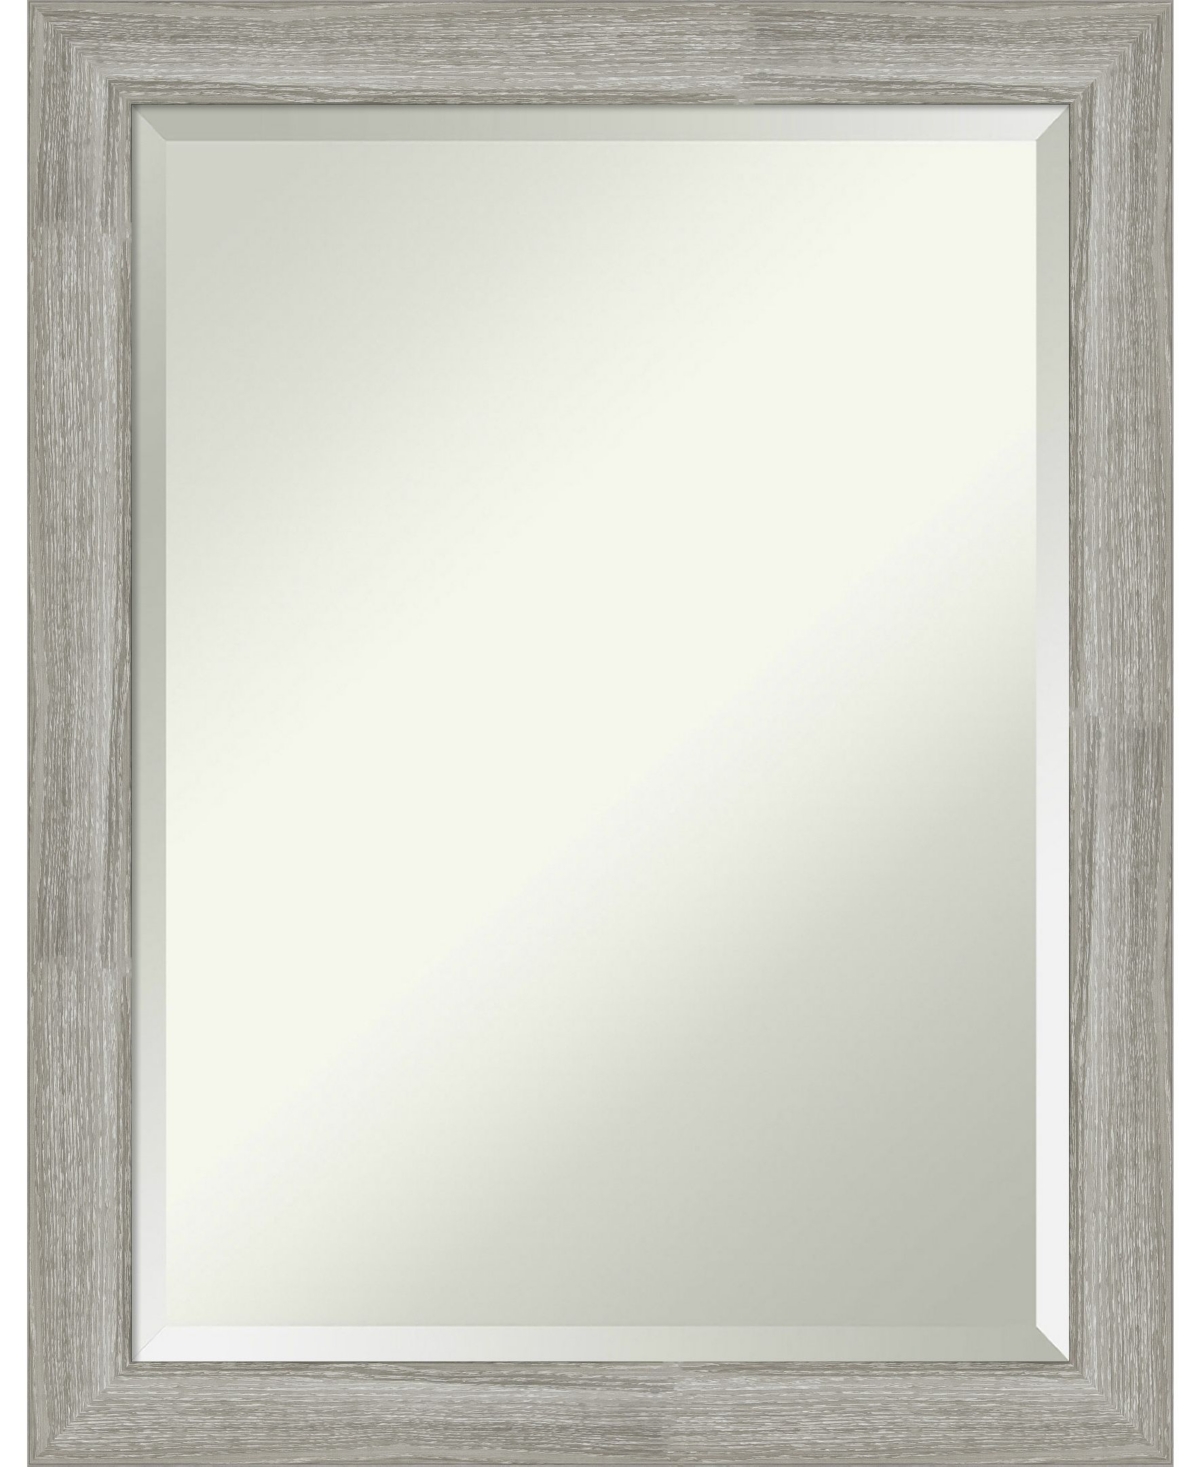 Dove Framed Bathroom Vanity Wall Mirror, 21.5" x 27.50" - Gray